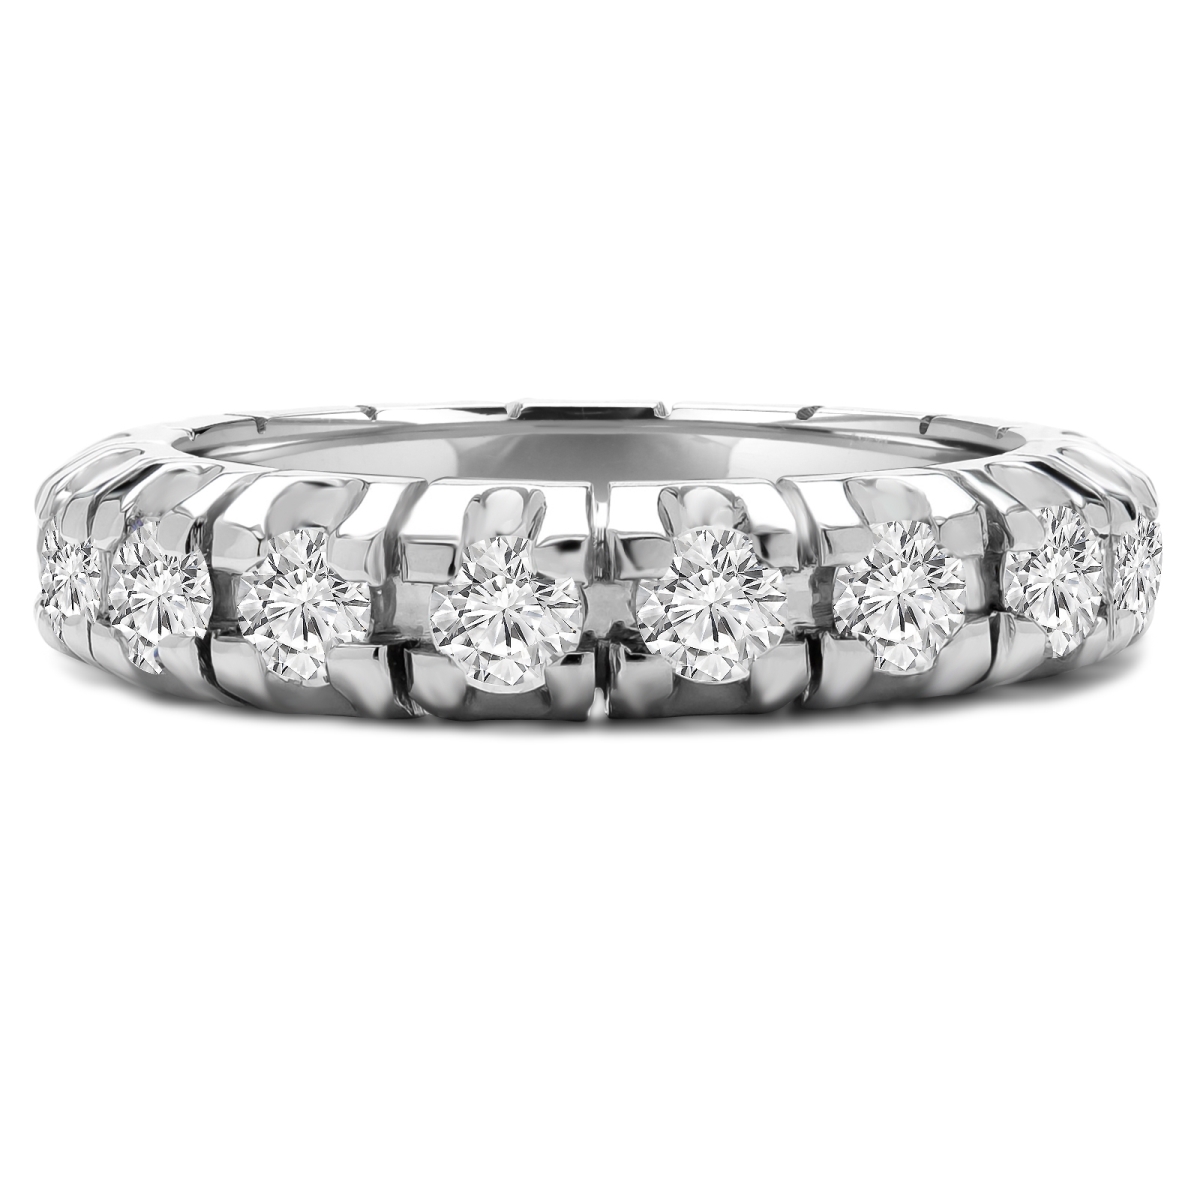 Majesty Diamonds MD210319-7.5 3.33 CTW Round Diamond Full-Eternity Anniversary Wedding Band Ring in 18K White Gold - Size 7.5